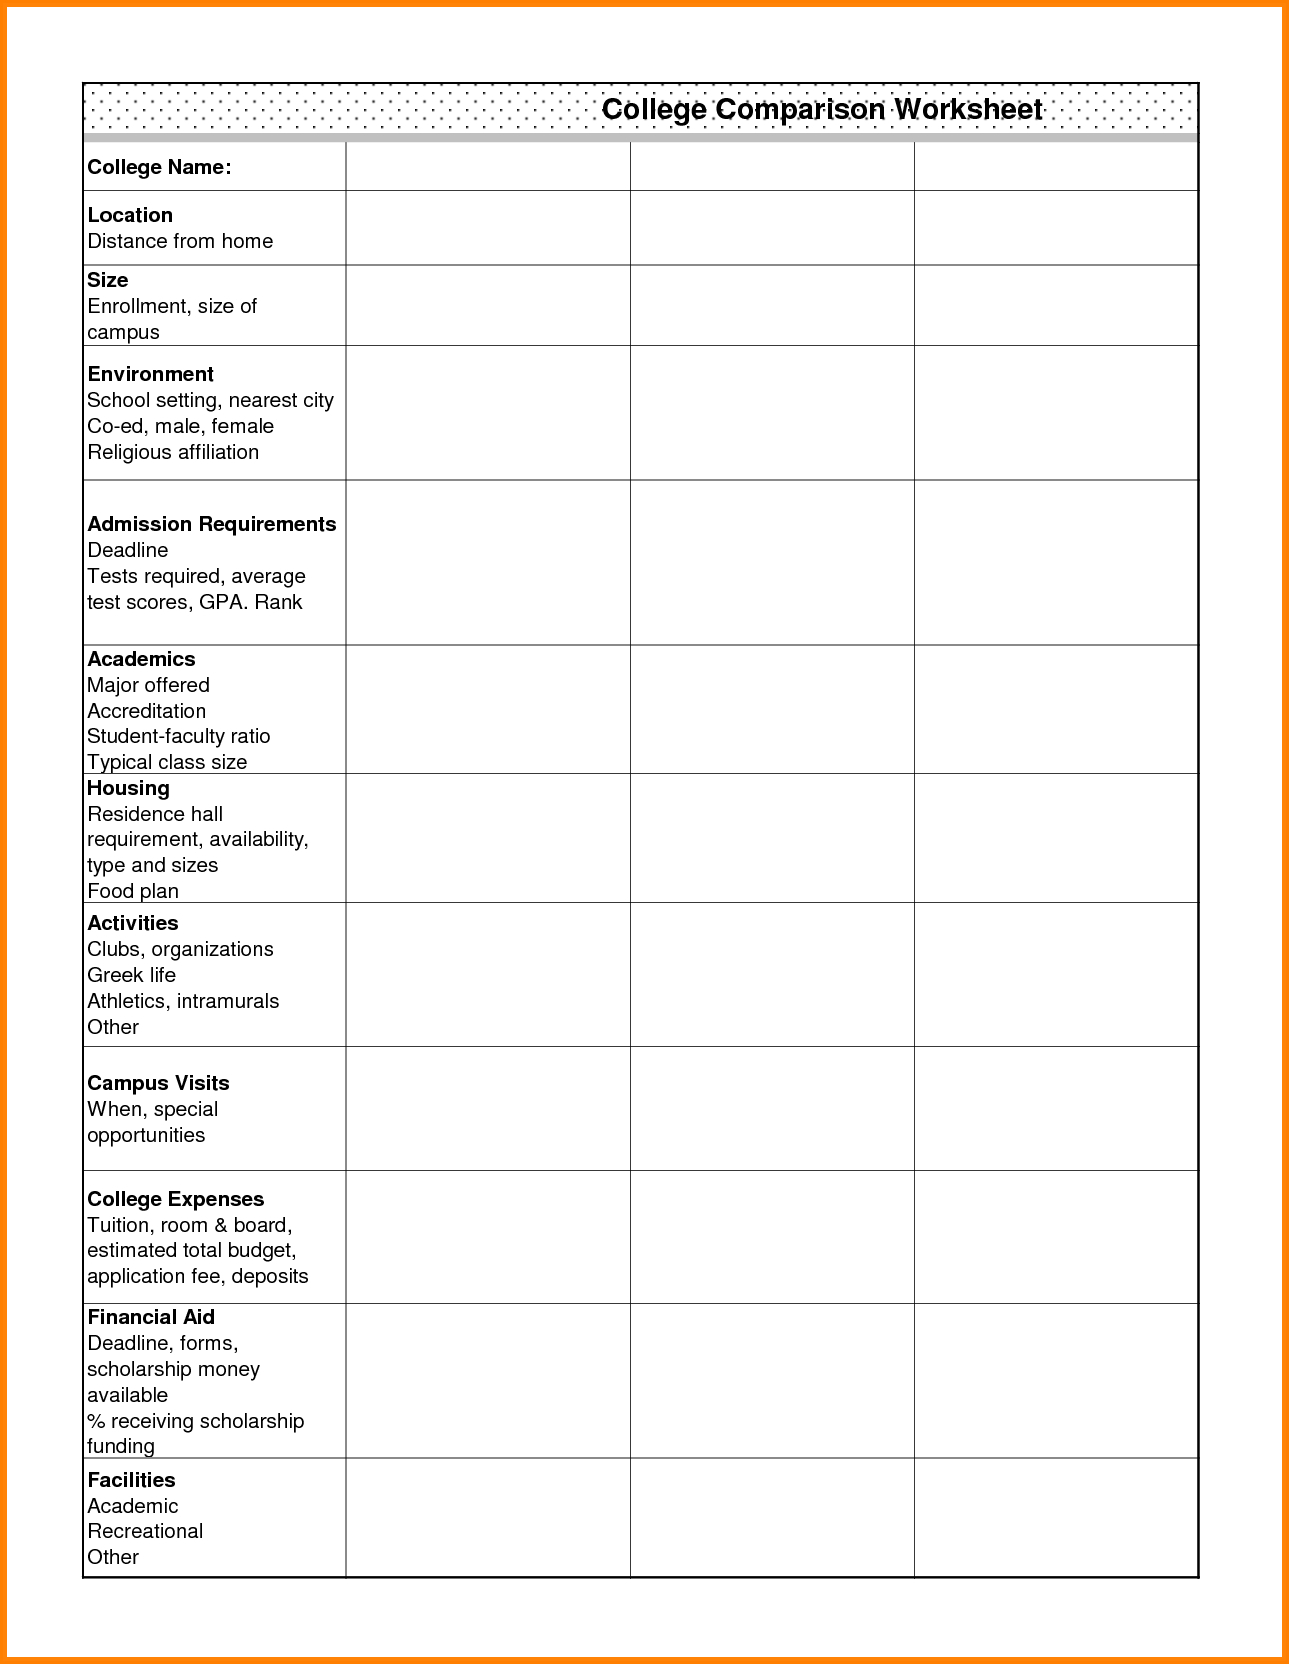 Commercial Loan Comparison Spreadsheet regarding College Comparison Worksheet The Best Worksheets Image Collection